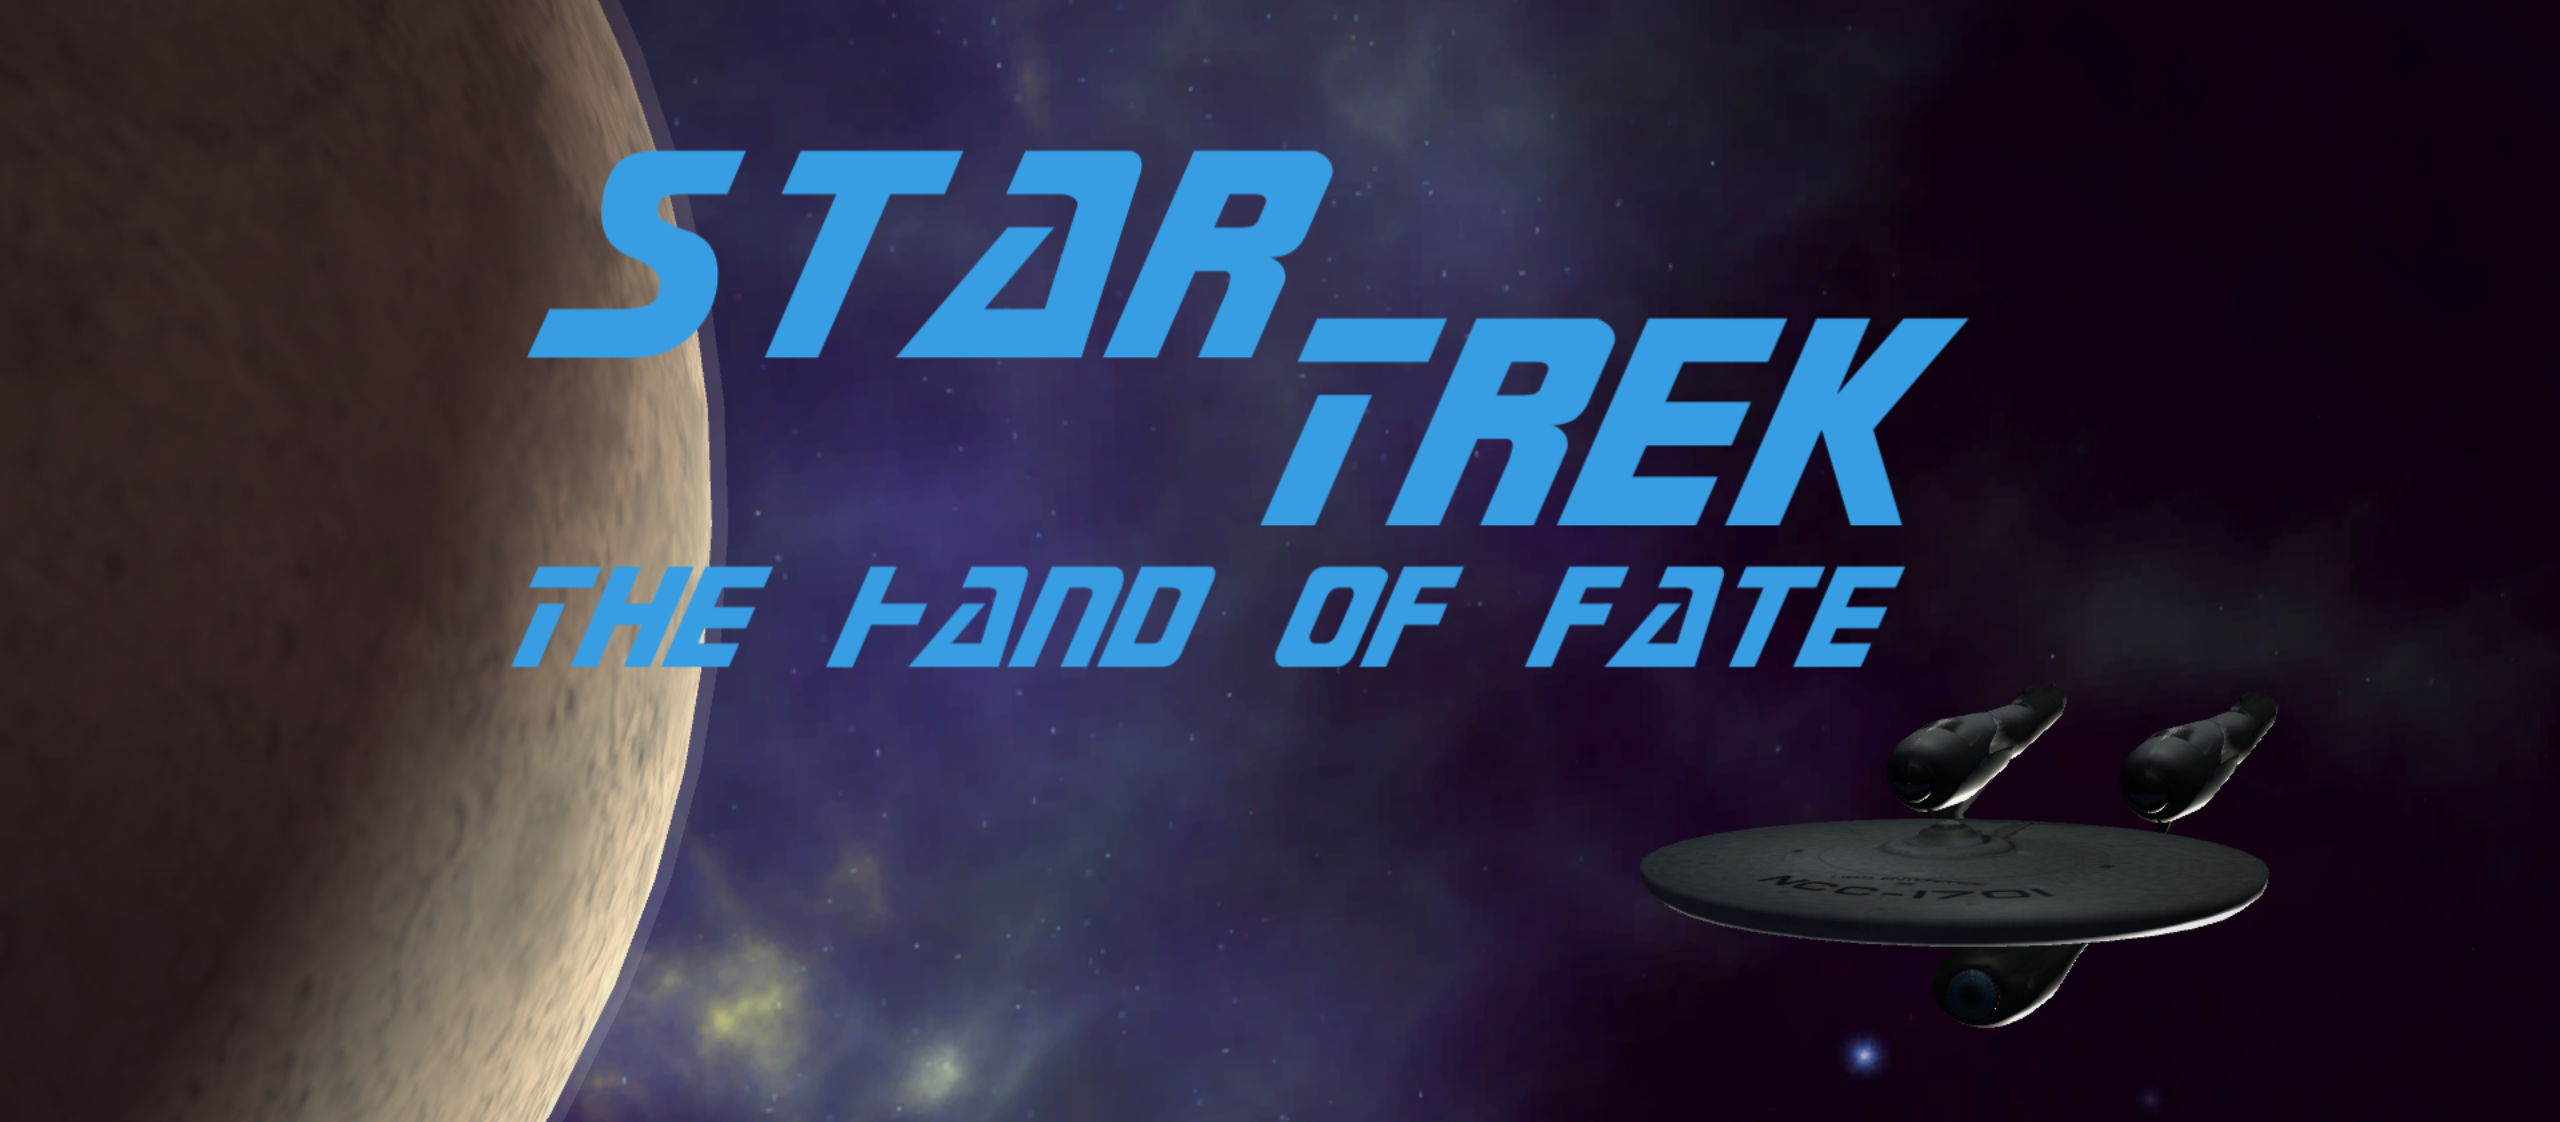 Star Trek: The Hand of Fate